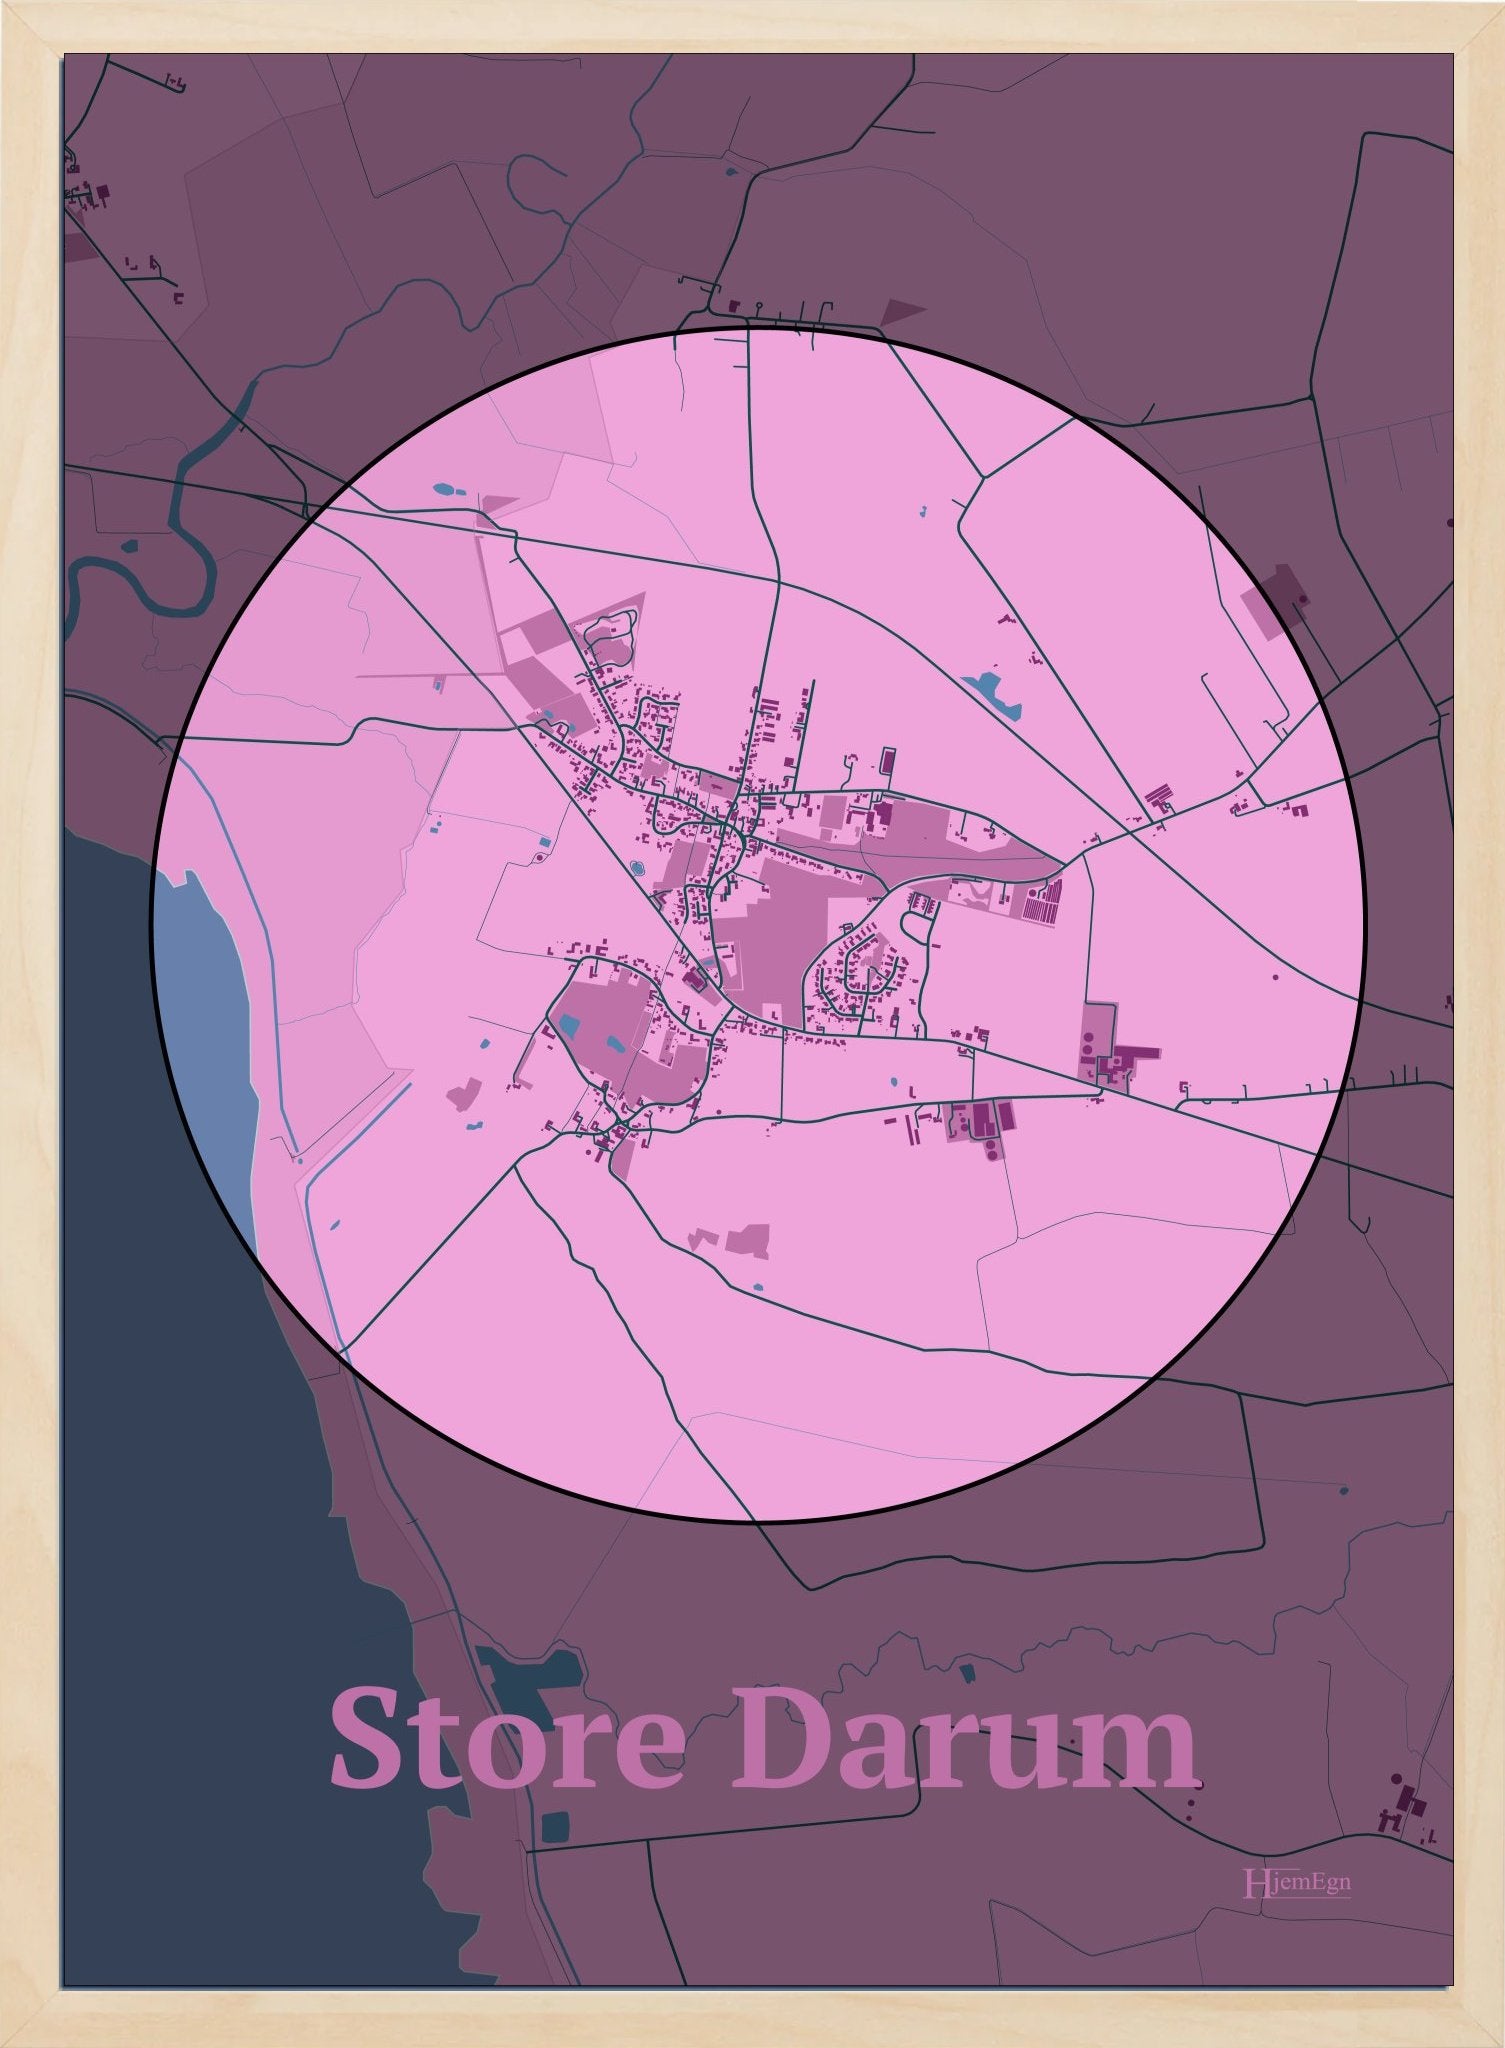 Store Darum plakat i farve pastel rød og HjemEgn.dk design centrum. Design bykort for Store Darum